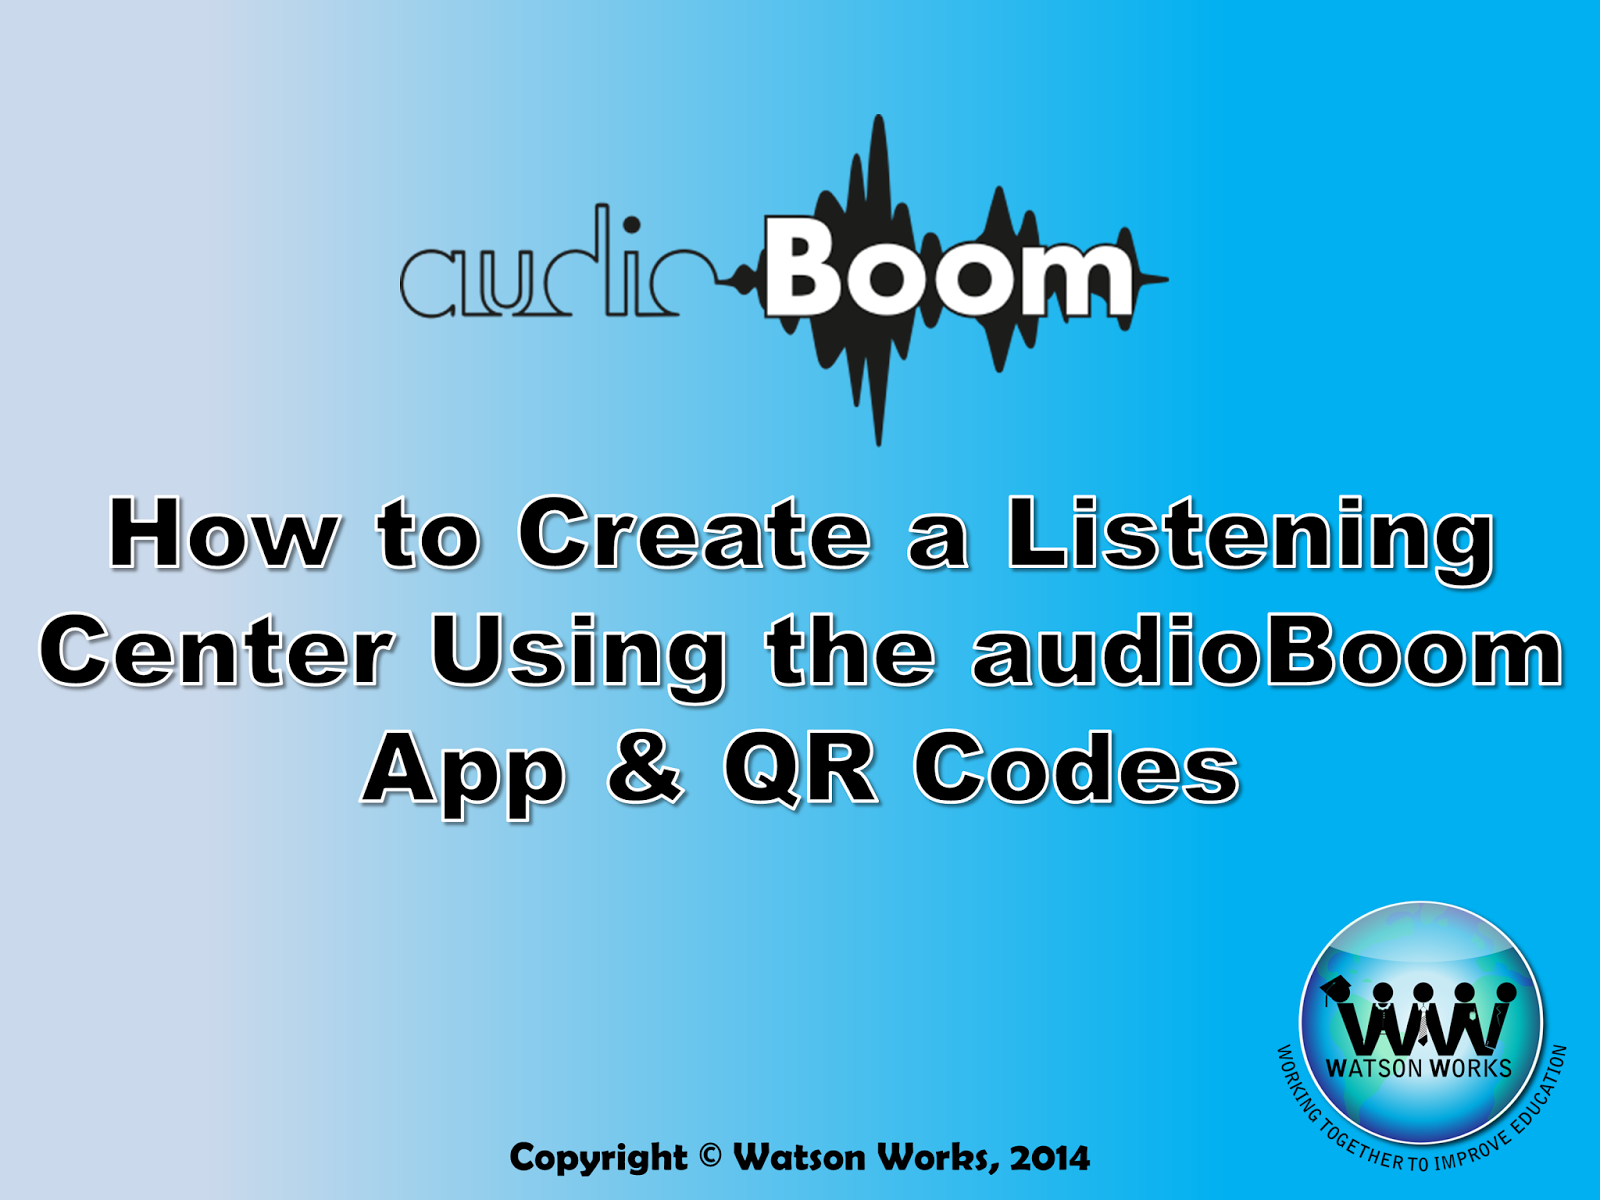 http://www.teacherspayteachers.com/Product/How-to-Create-a-Listening-Center-Using-the-Audioboom-App-QR-Codes-1448099